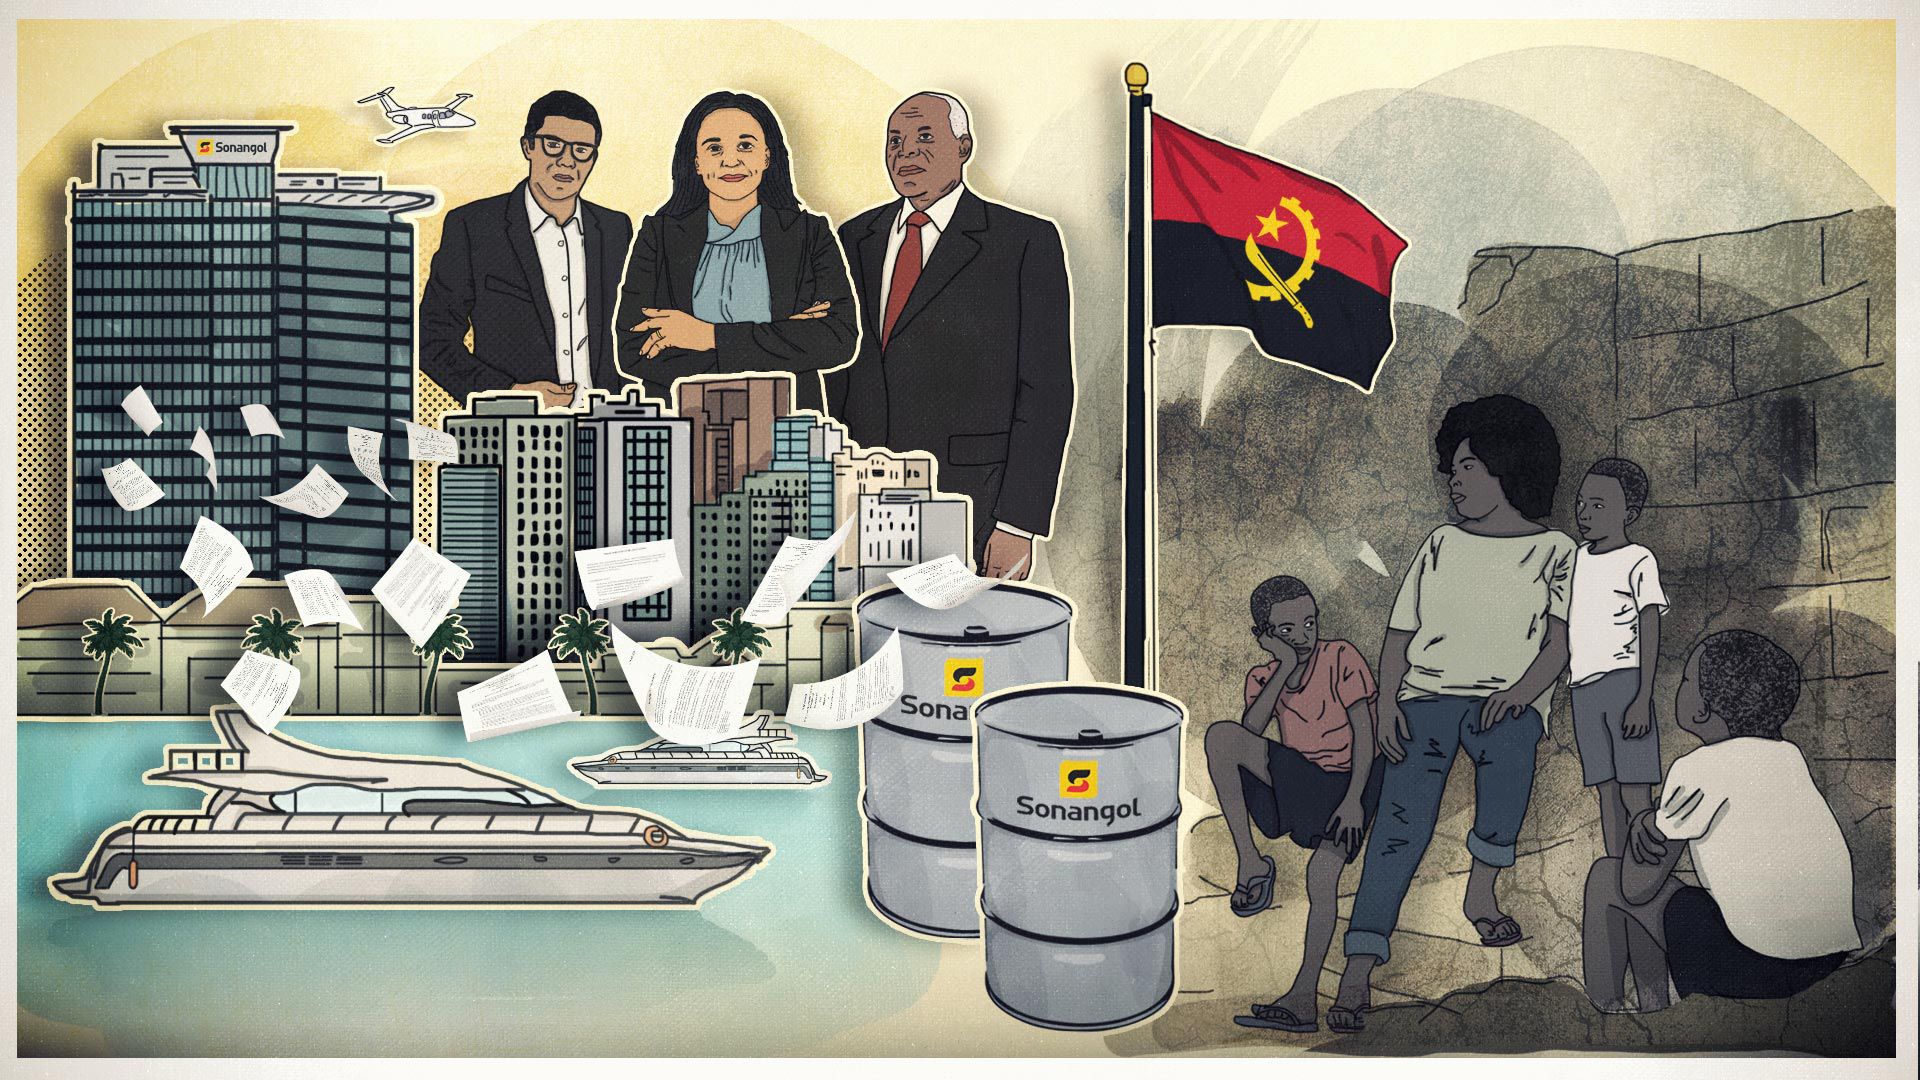 Luanda Leaks - ICIJ